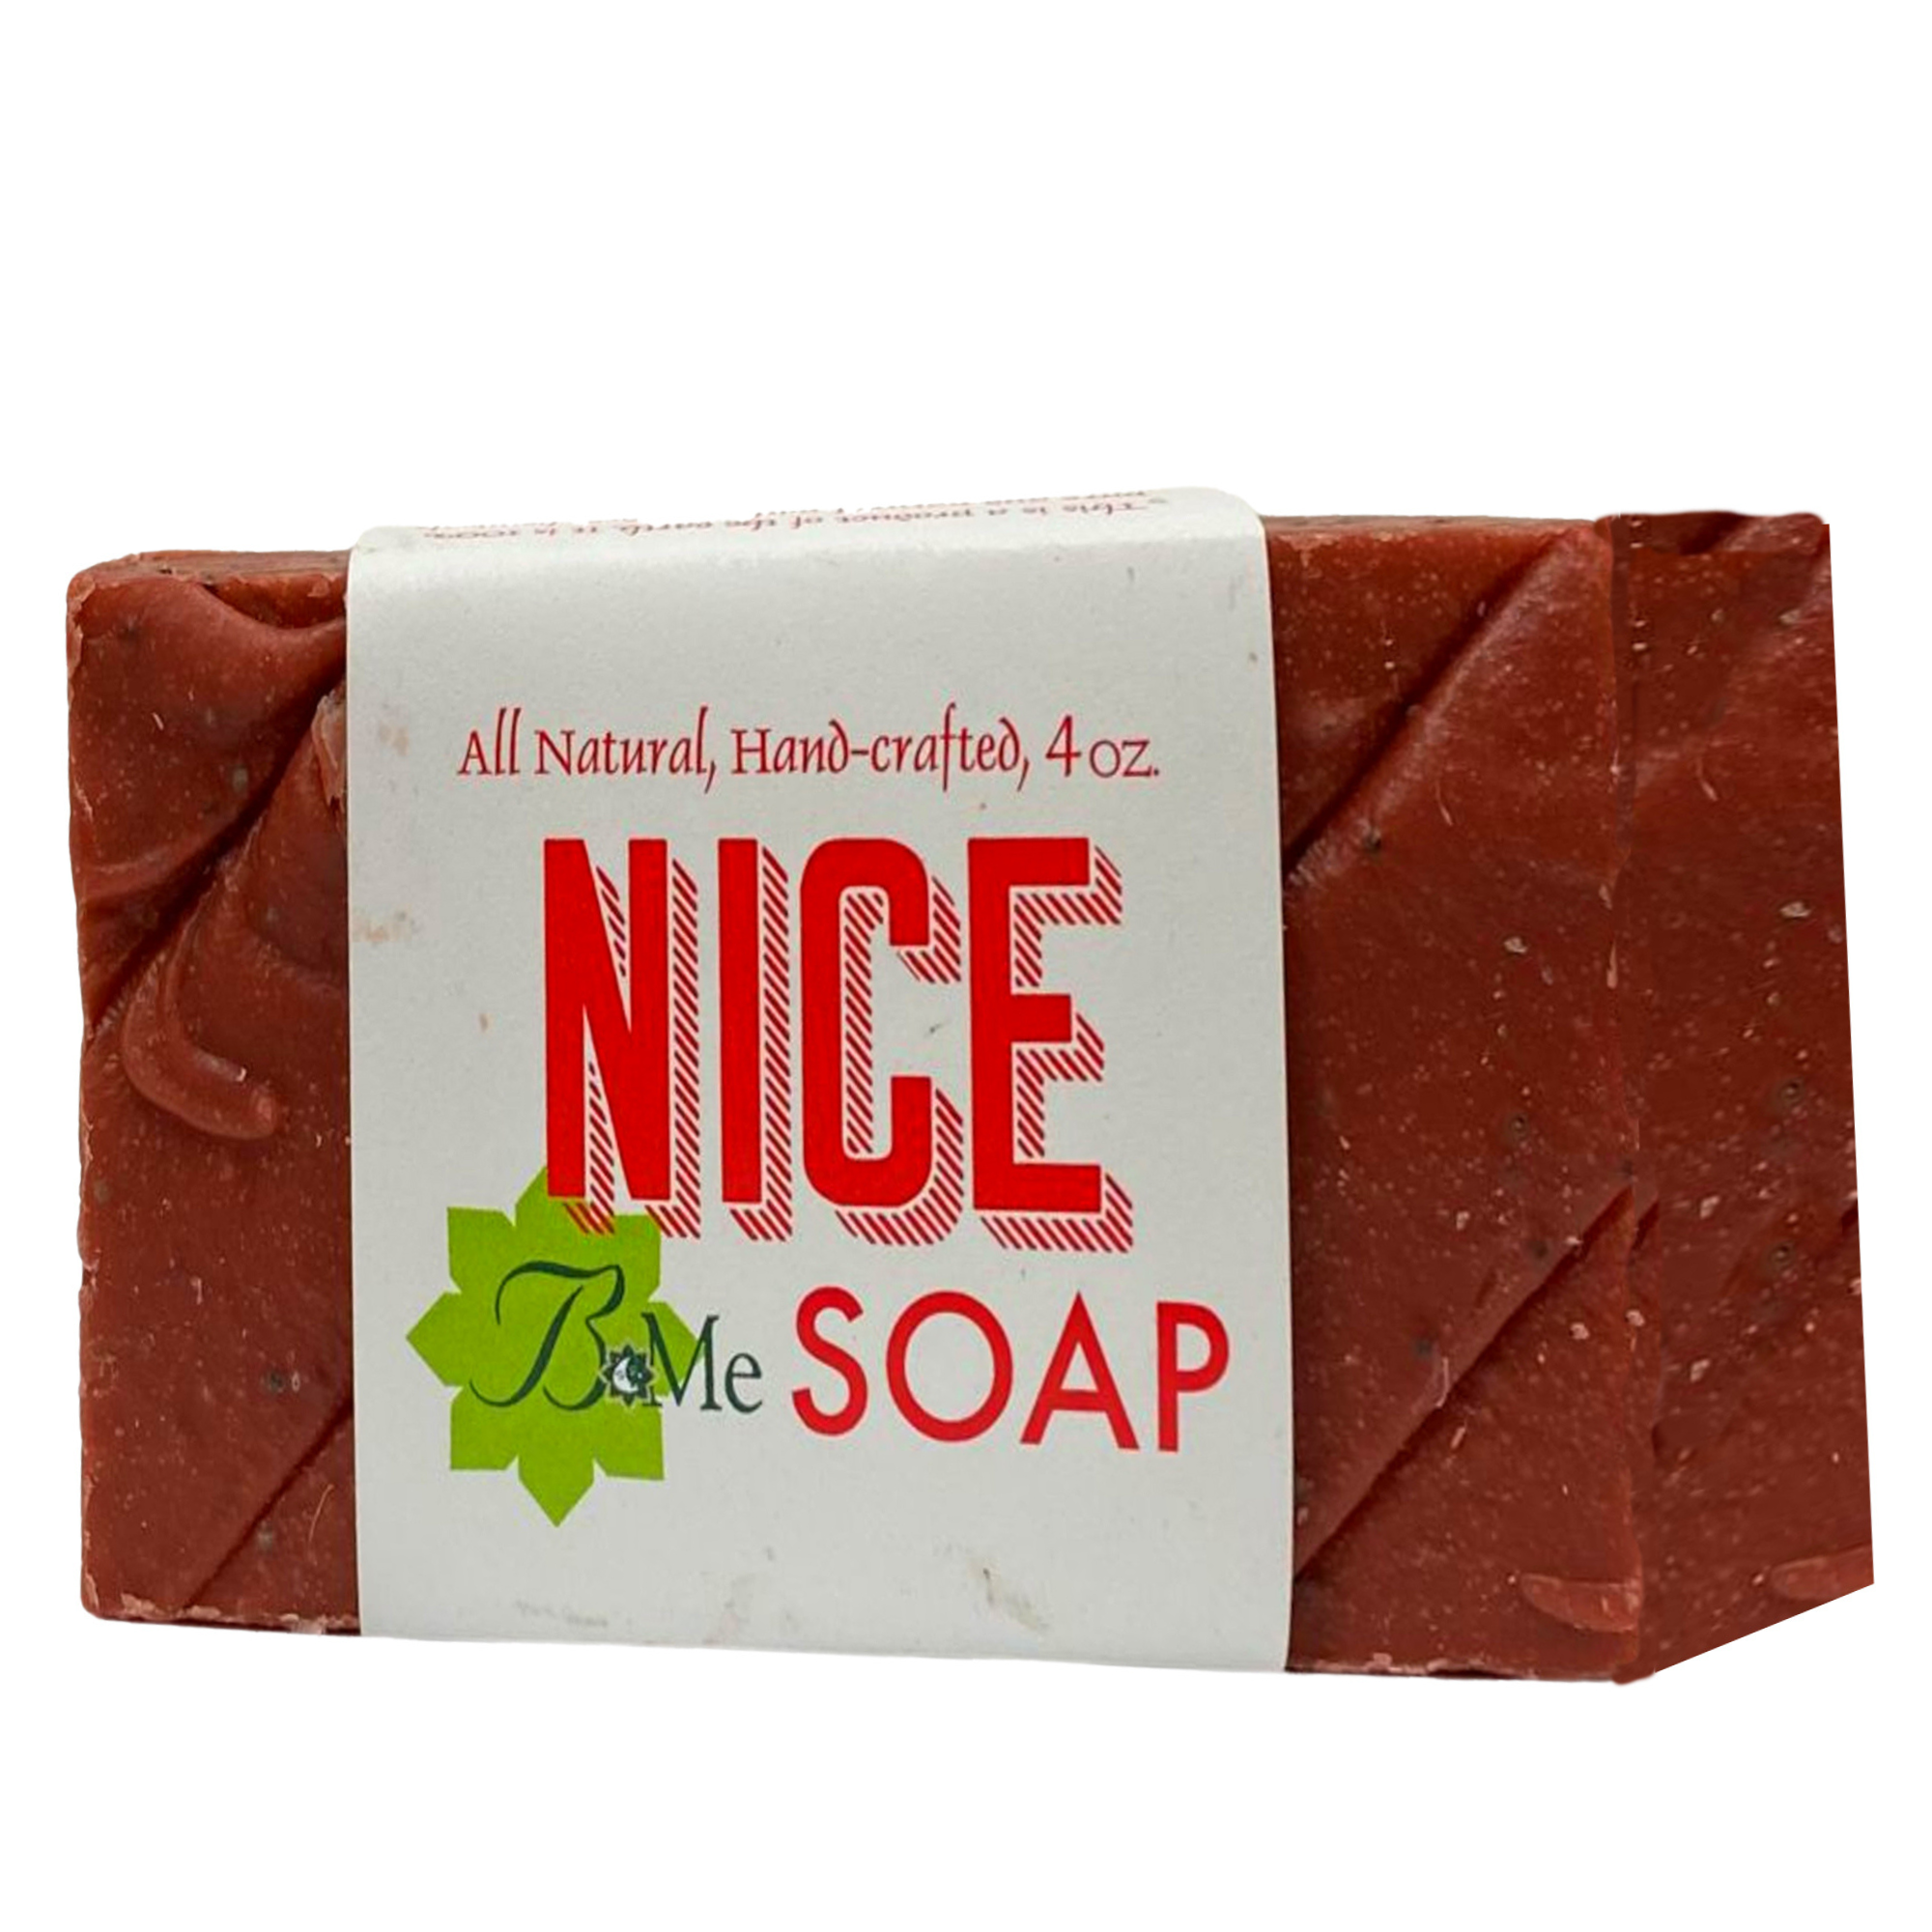 Nice Soap